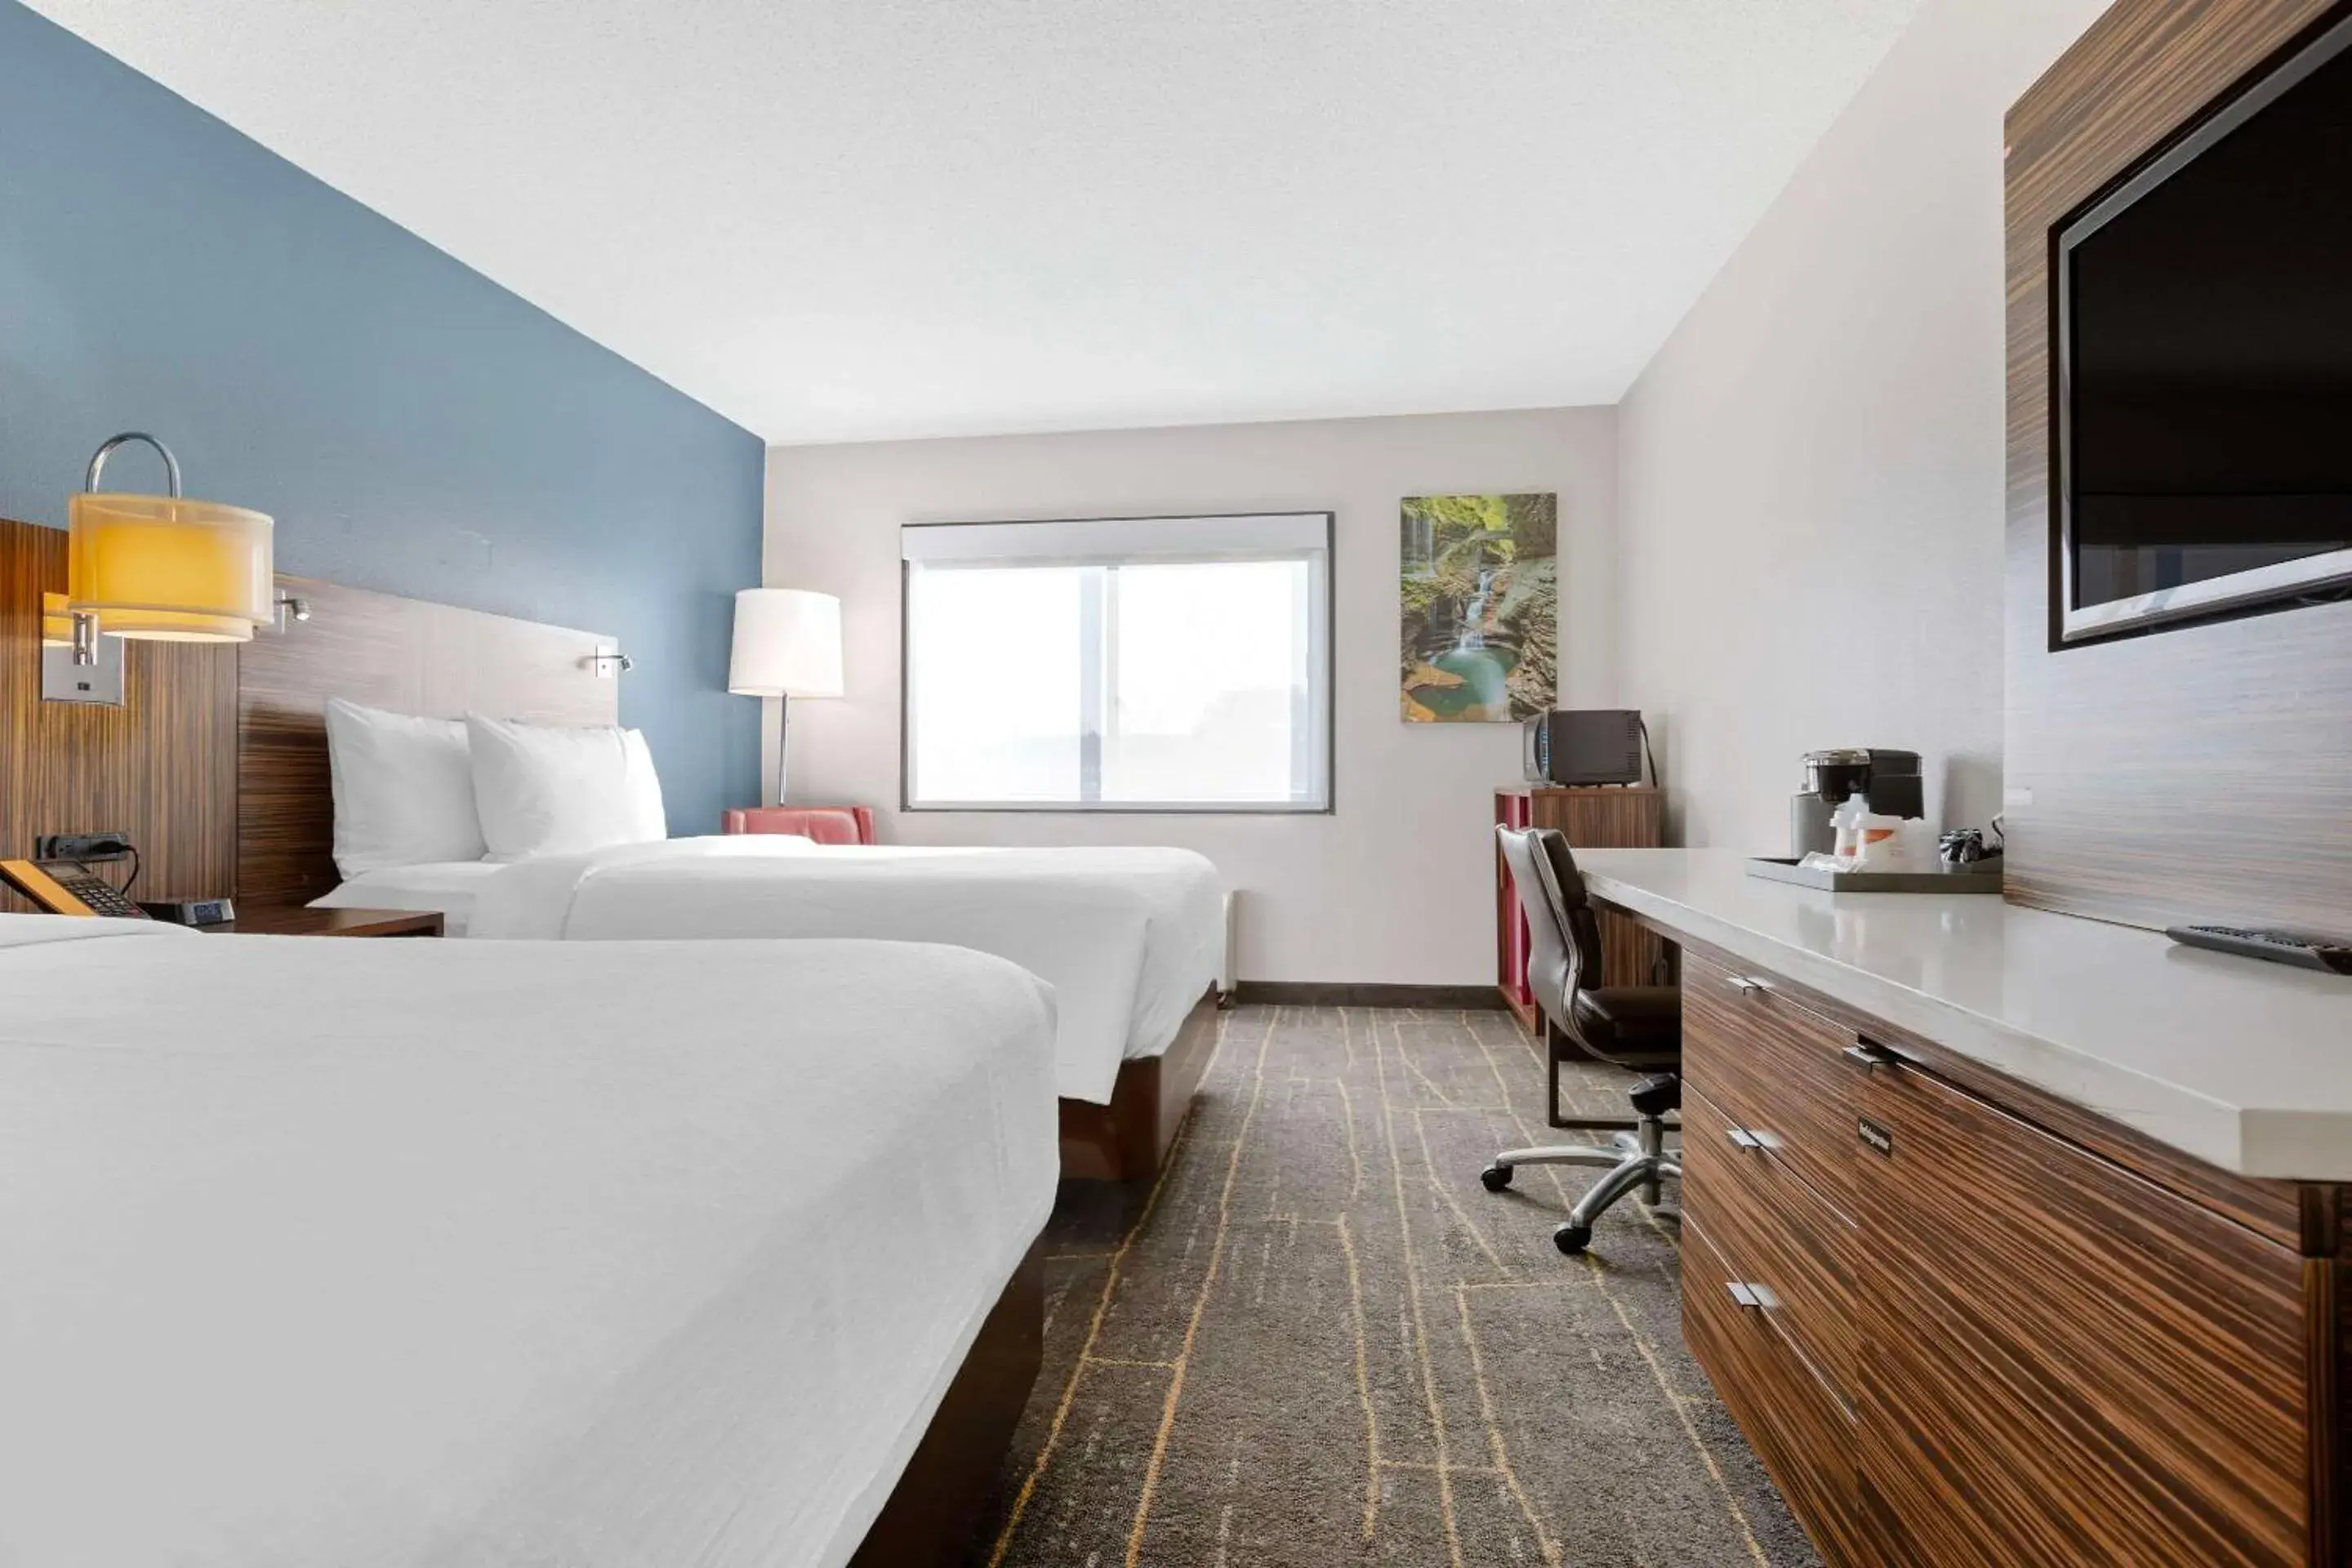 Bedroom in Quality Inn near Finger Lakes and Seneca Falls